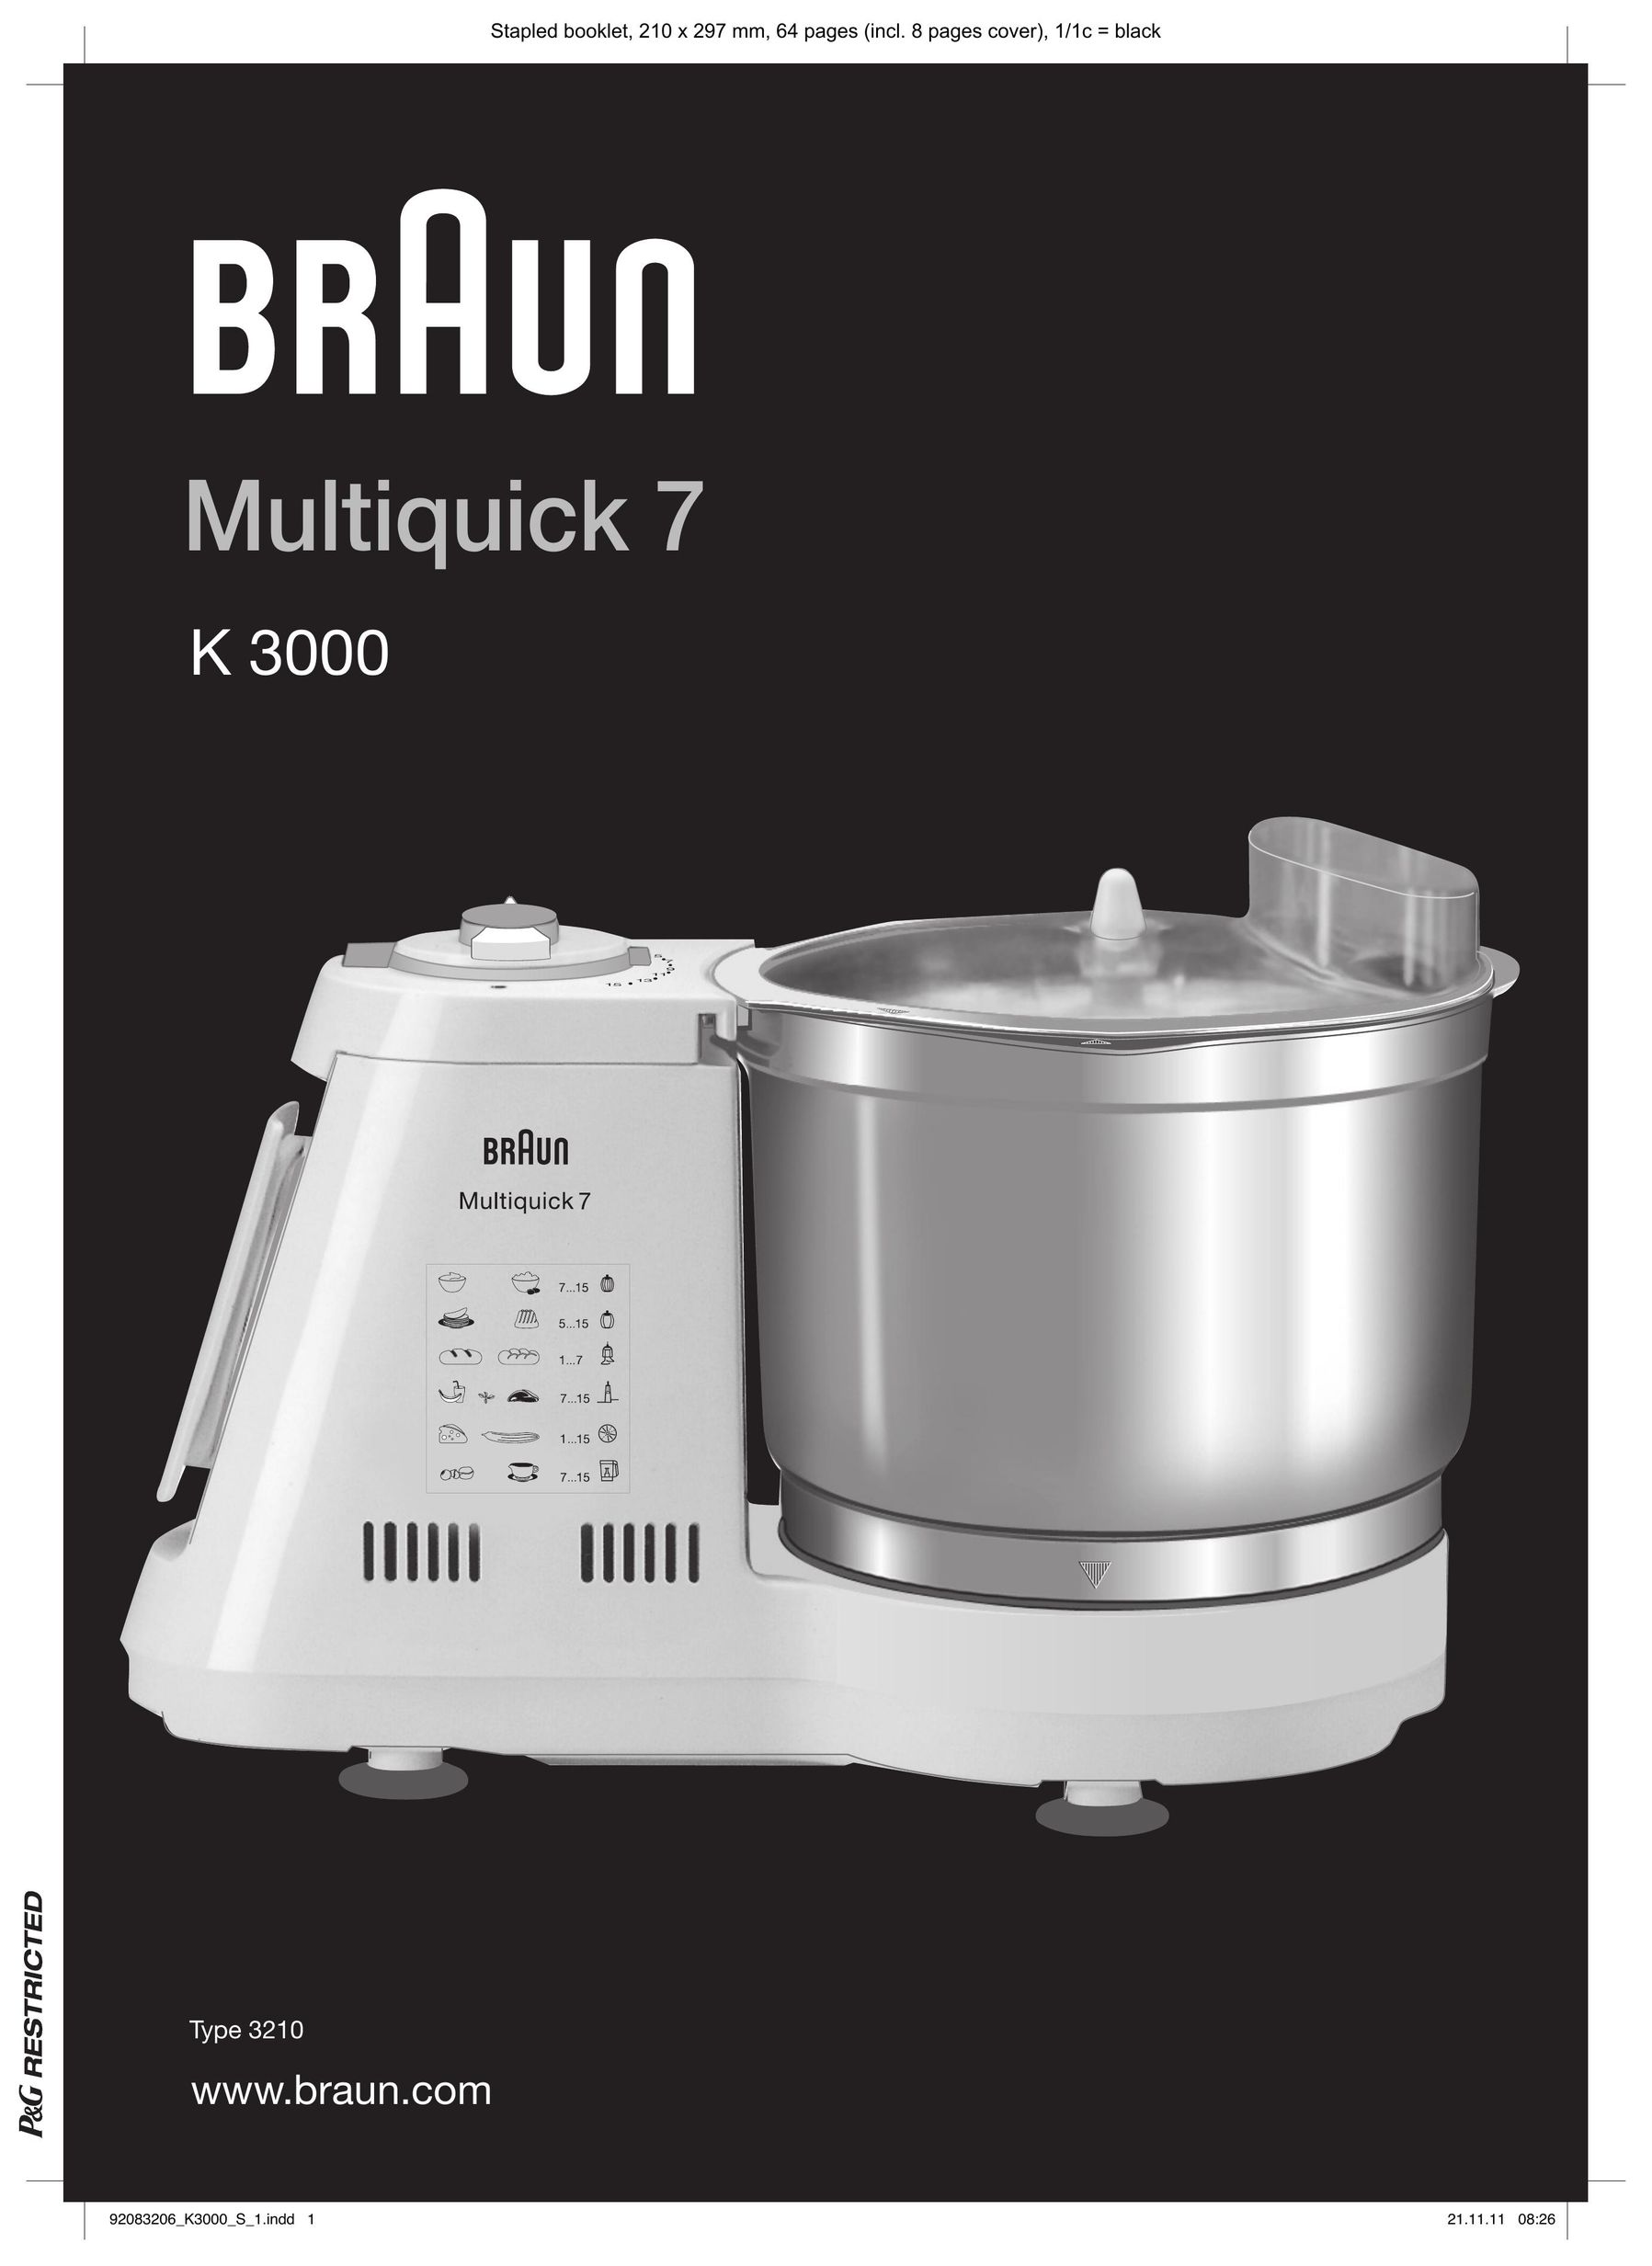 Braun K3000 Food Processor User Manual